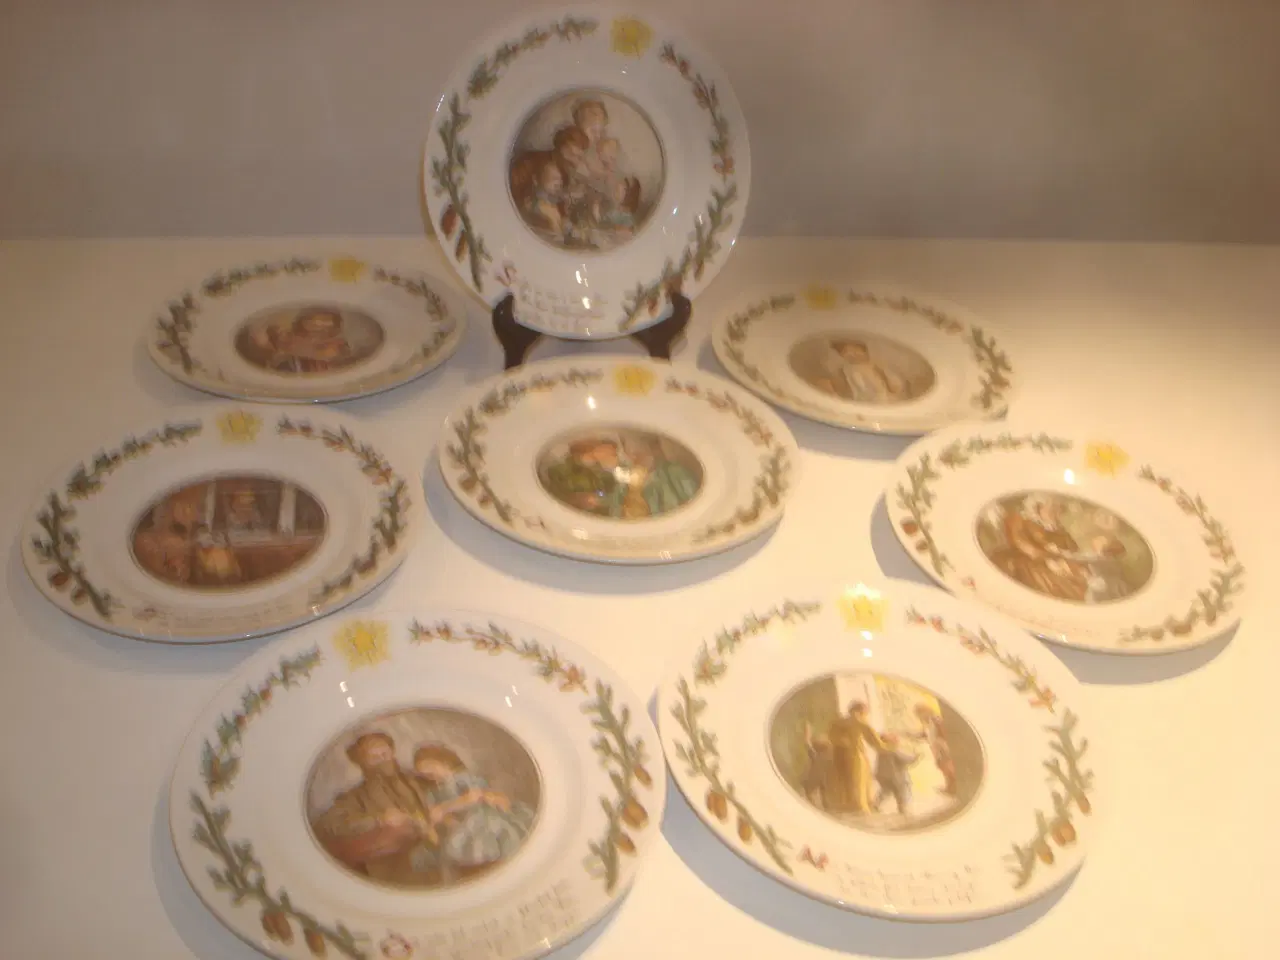 Billede 1 - kgl "Peters Jul" sæt på 8 tallerkener- hele serien